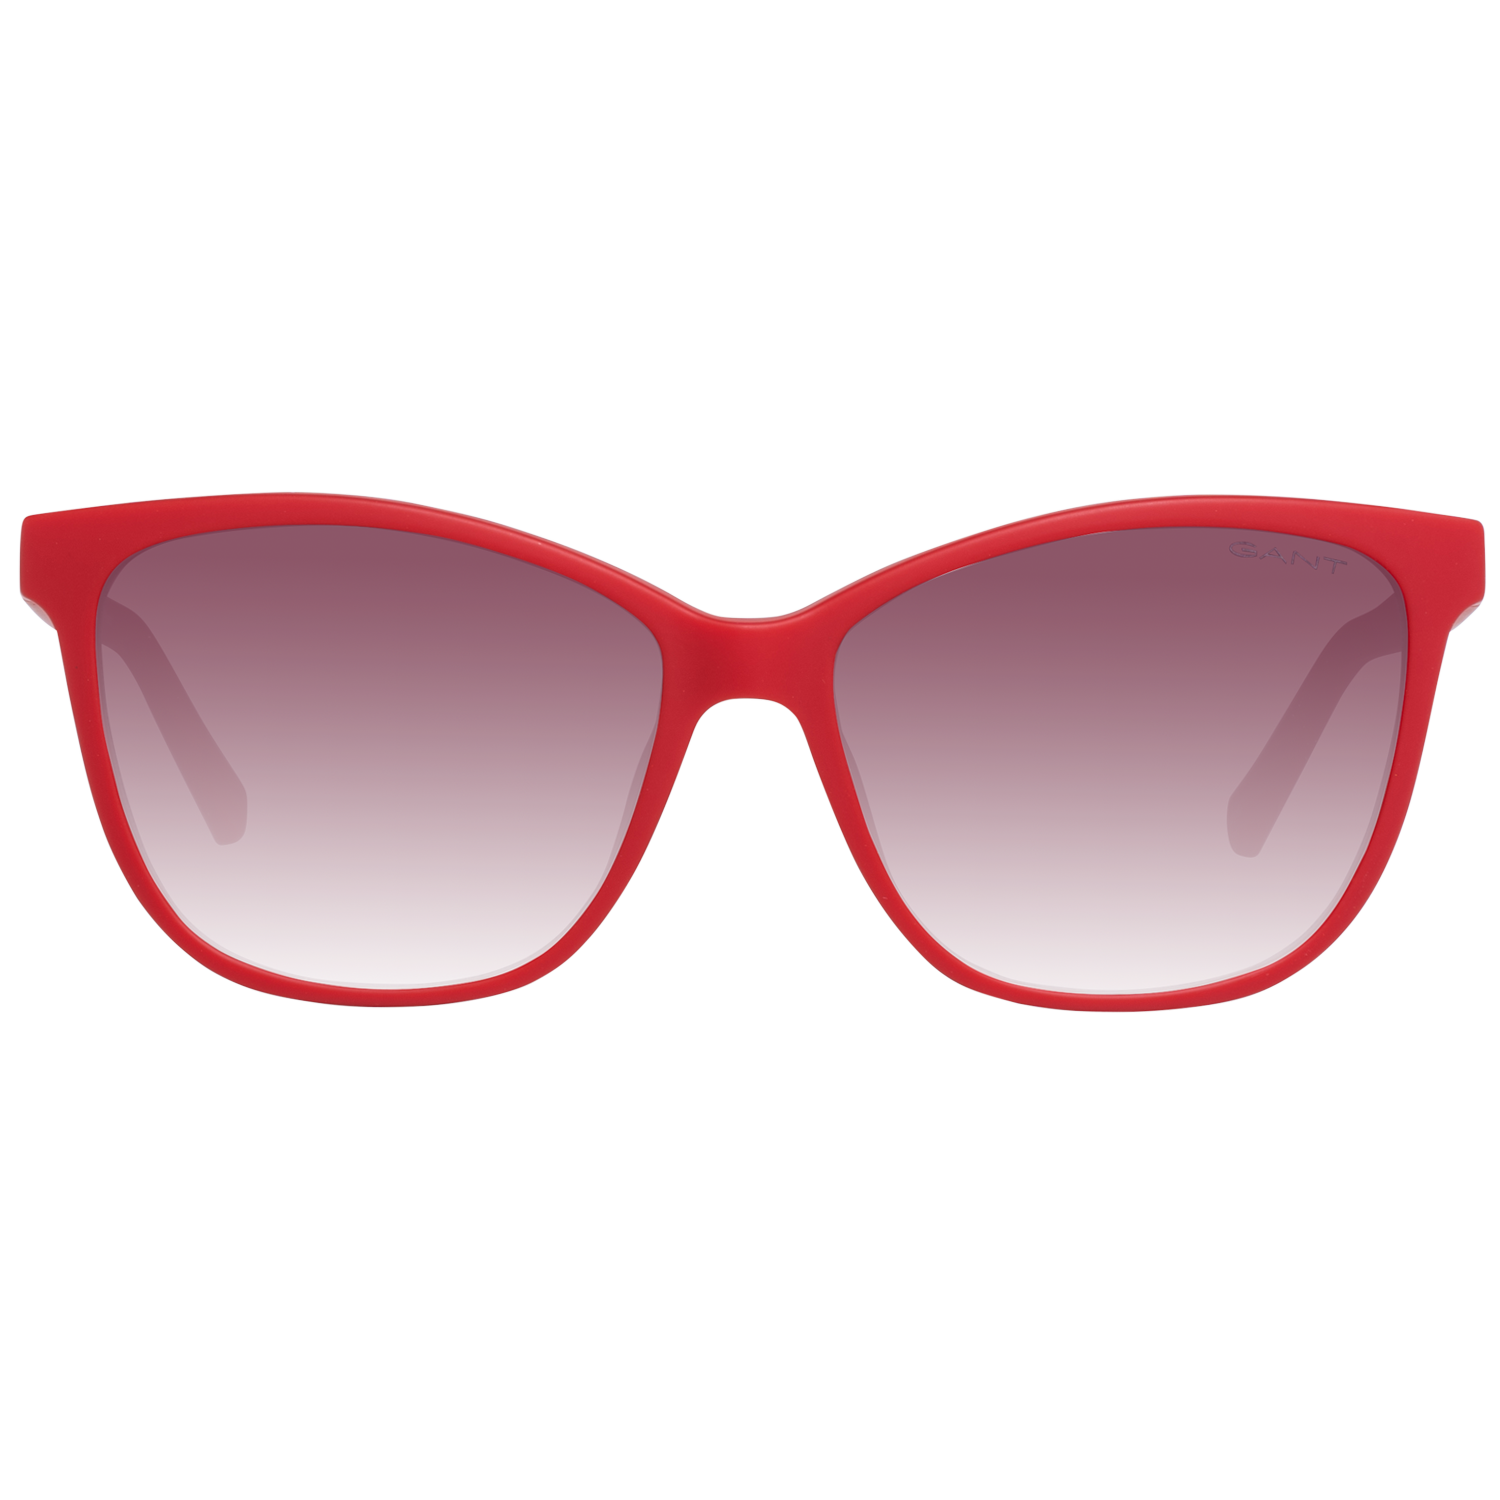 Gant Sunglasses Gant Sunglasses GA8084 67F 57 Eyeglasses Eyewear UK USA Australia 